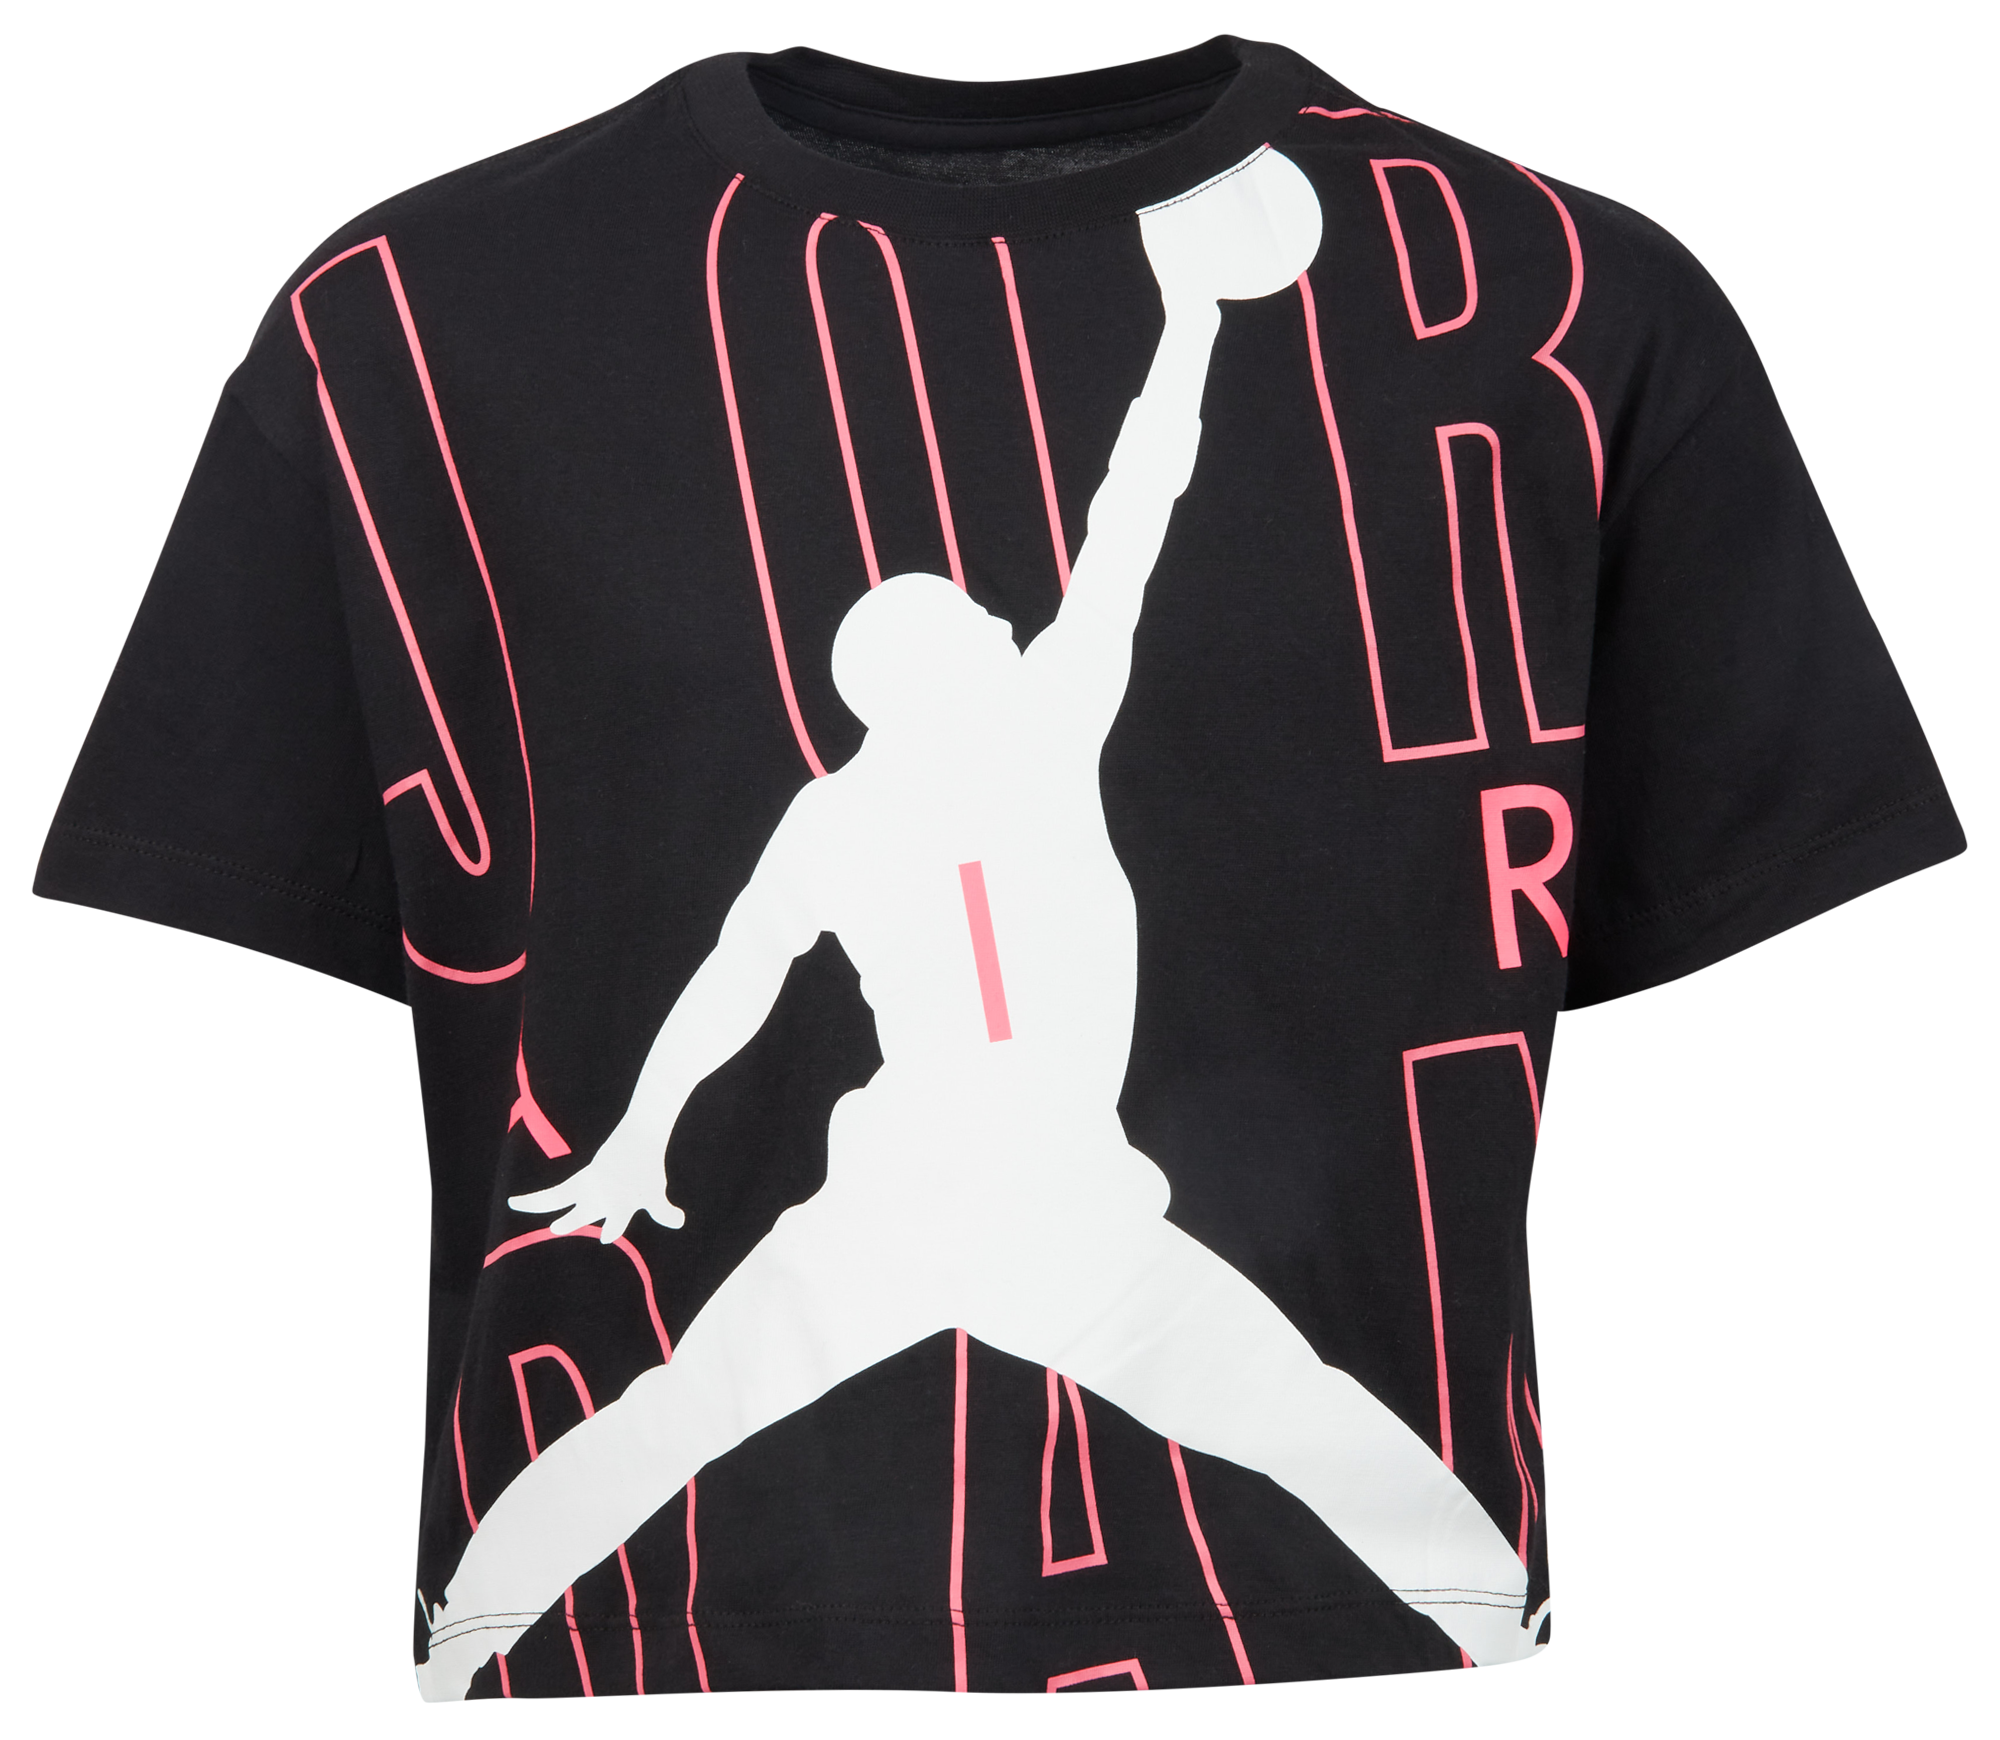 new jordan t shirt design